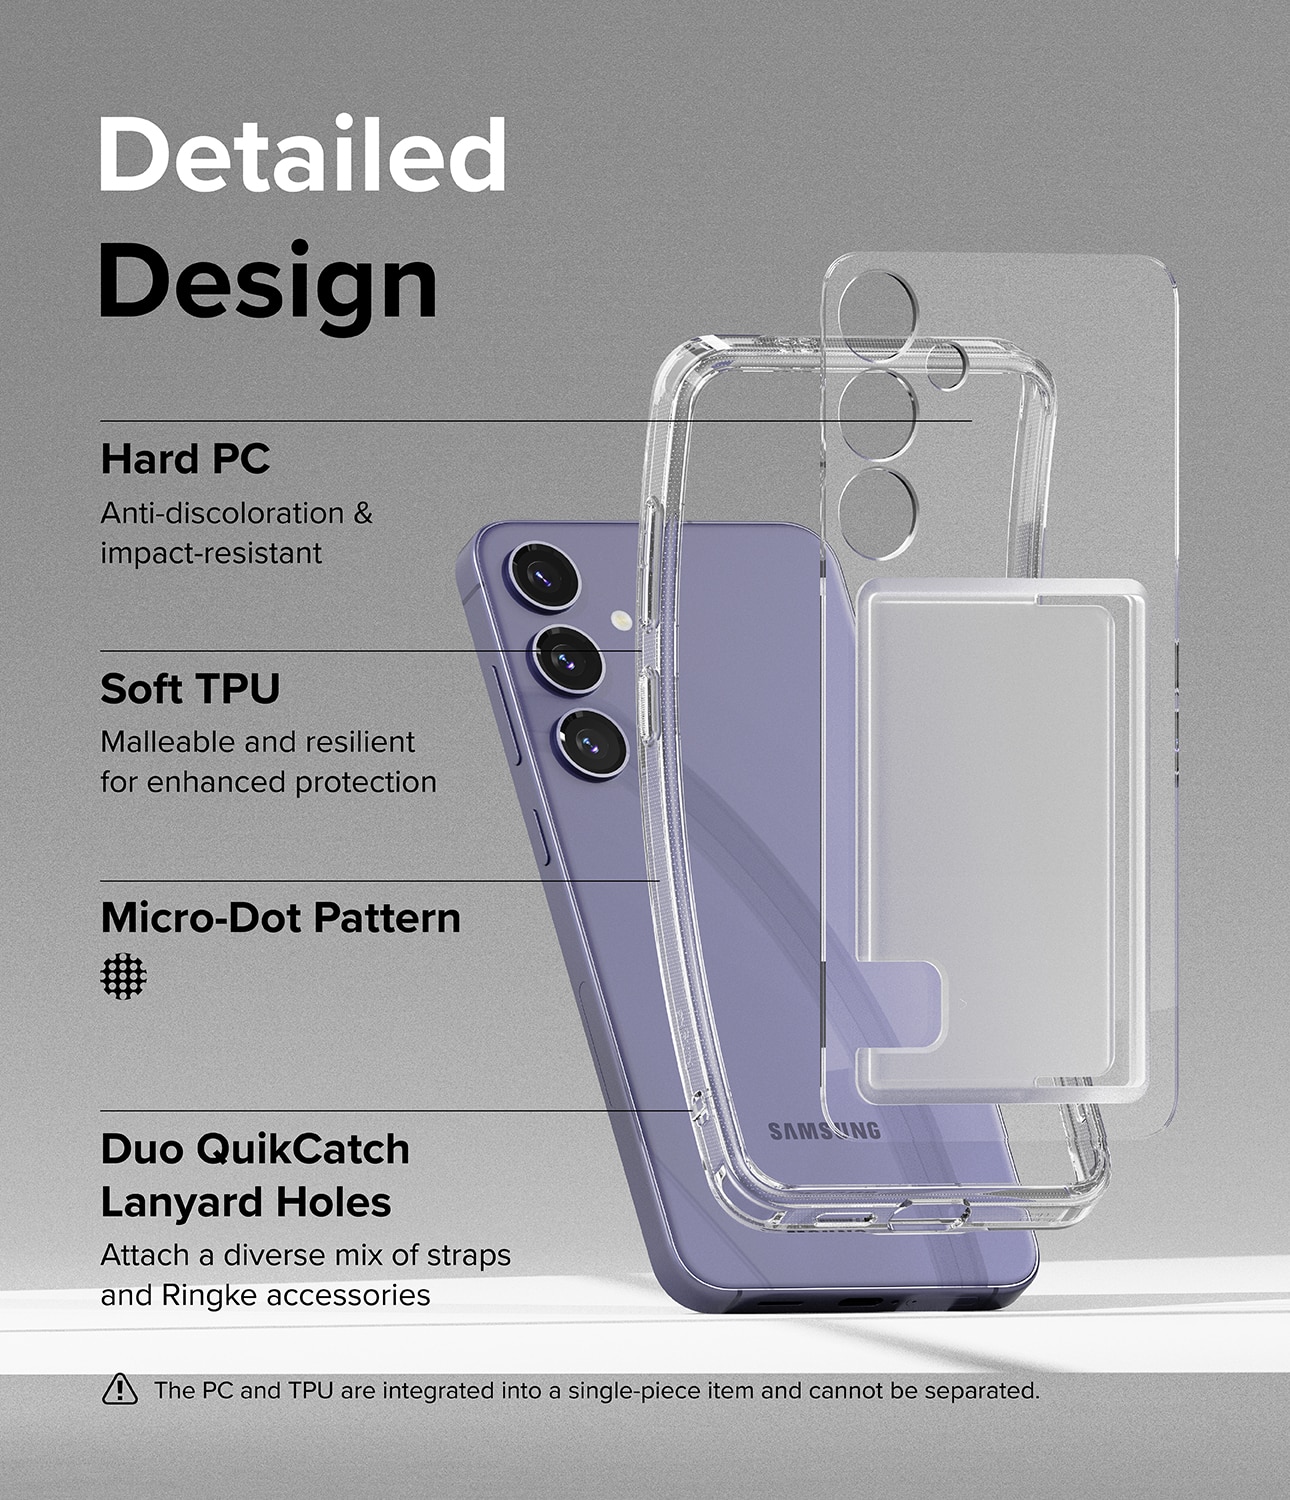 Funda Fusion Card Samsung Galaxy S24 transparente